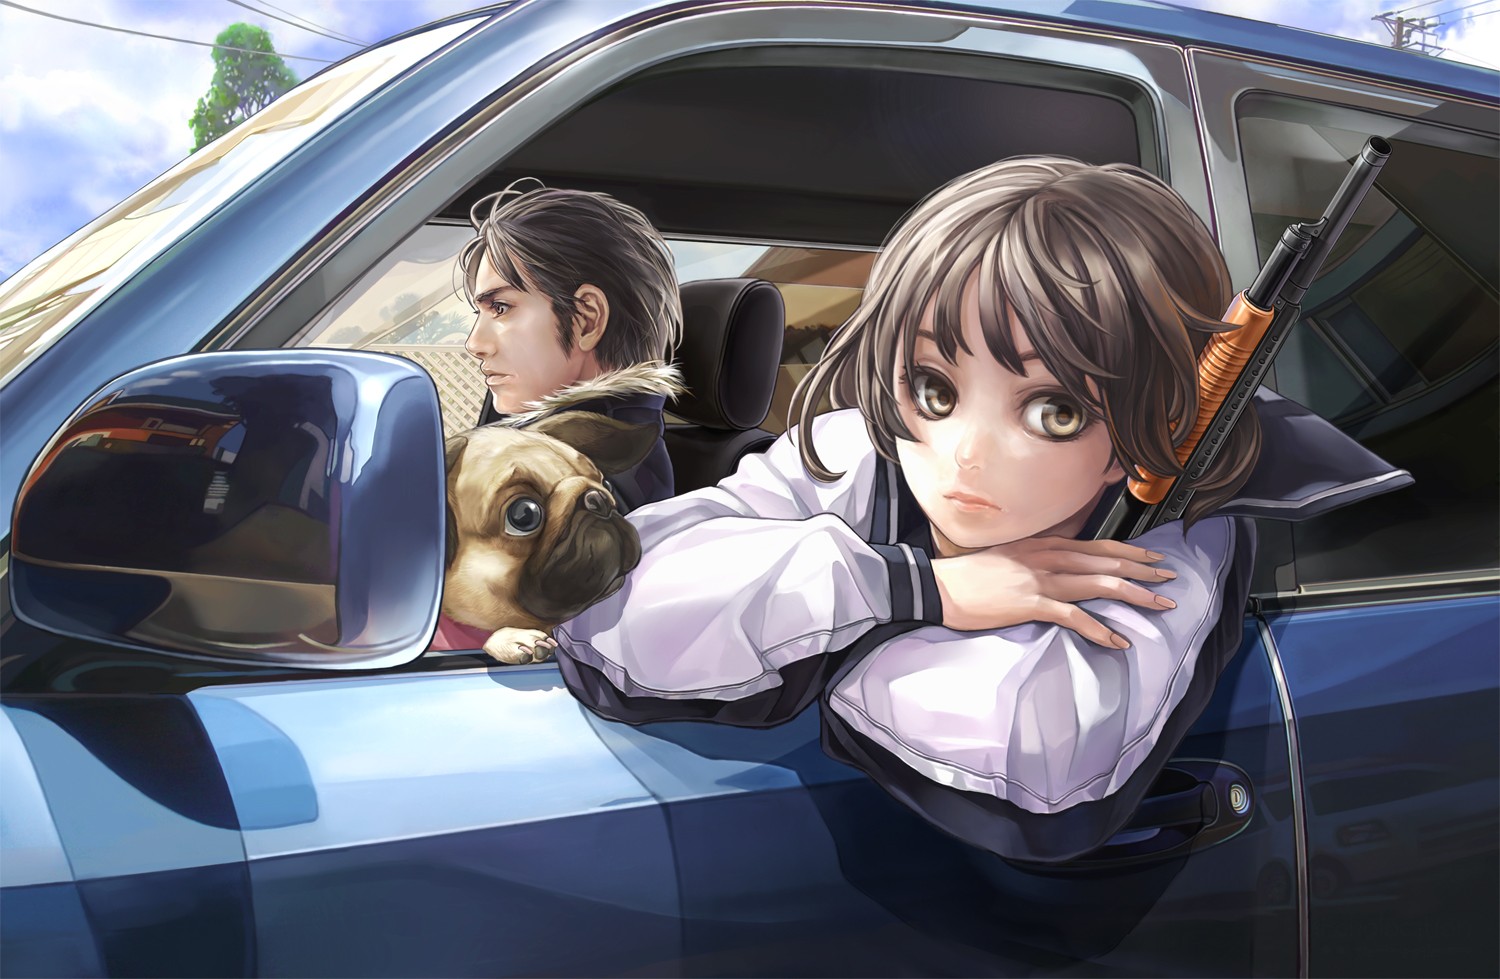 Anime 1500x979 shotgun anime girls weapon dog brunette car anime boys car interior driving gun women with cars girls with guns anime men vehicle blue cars animals mammals